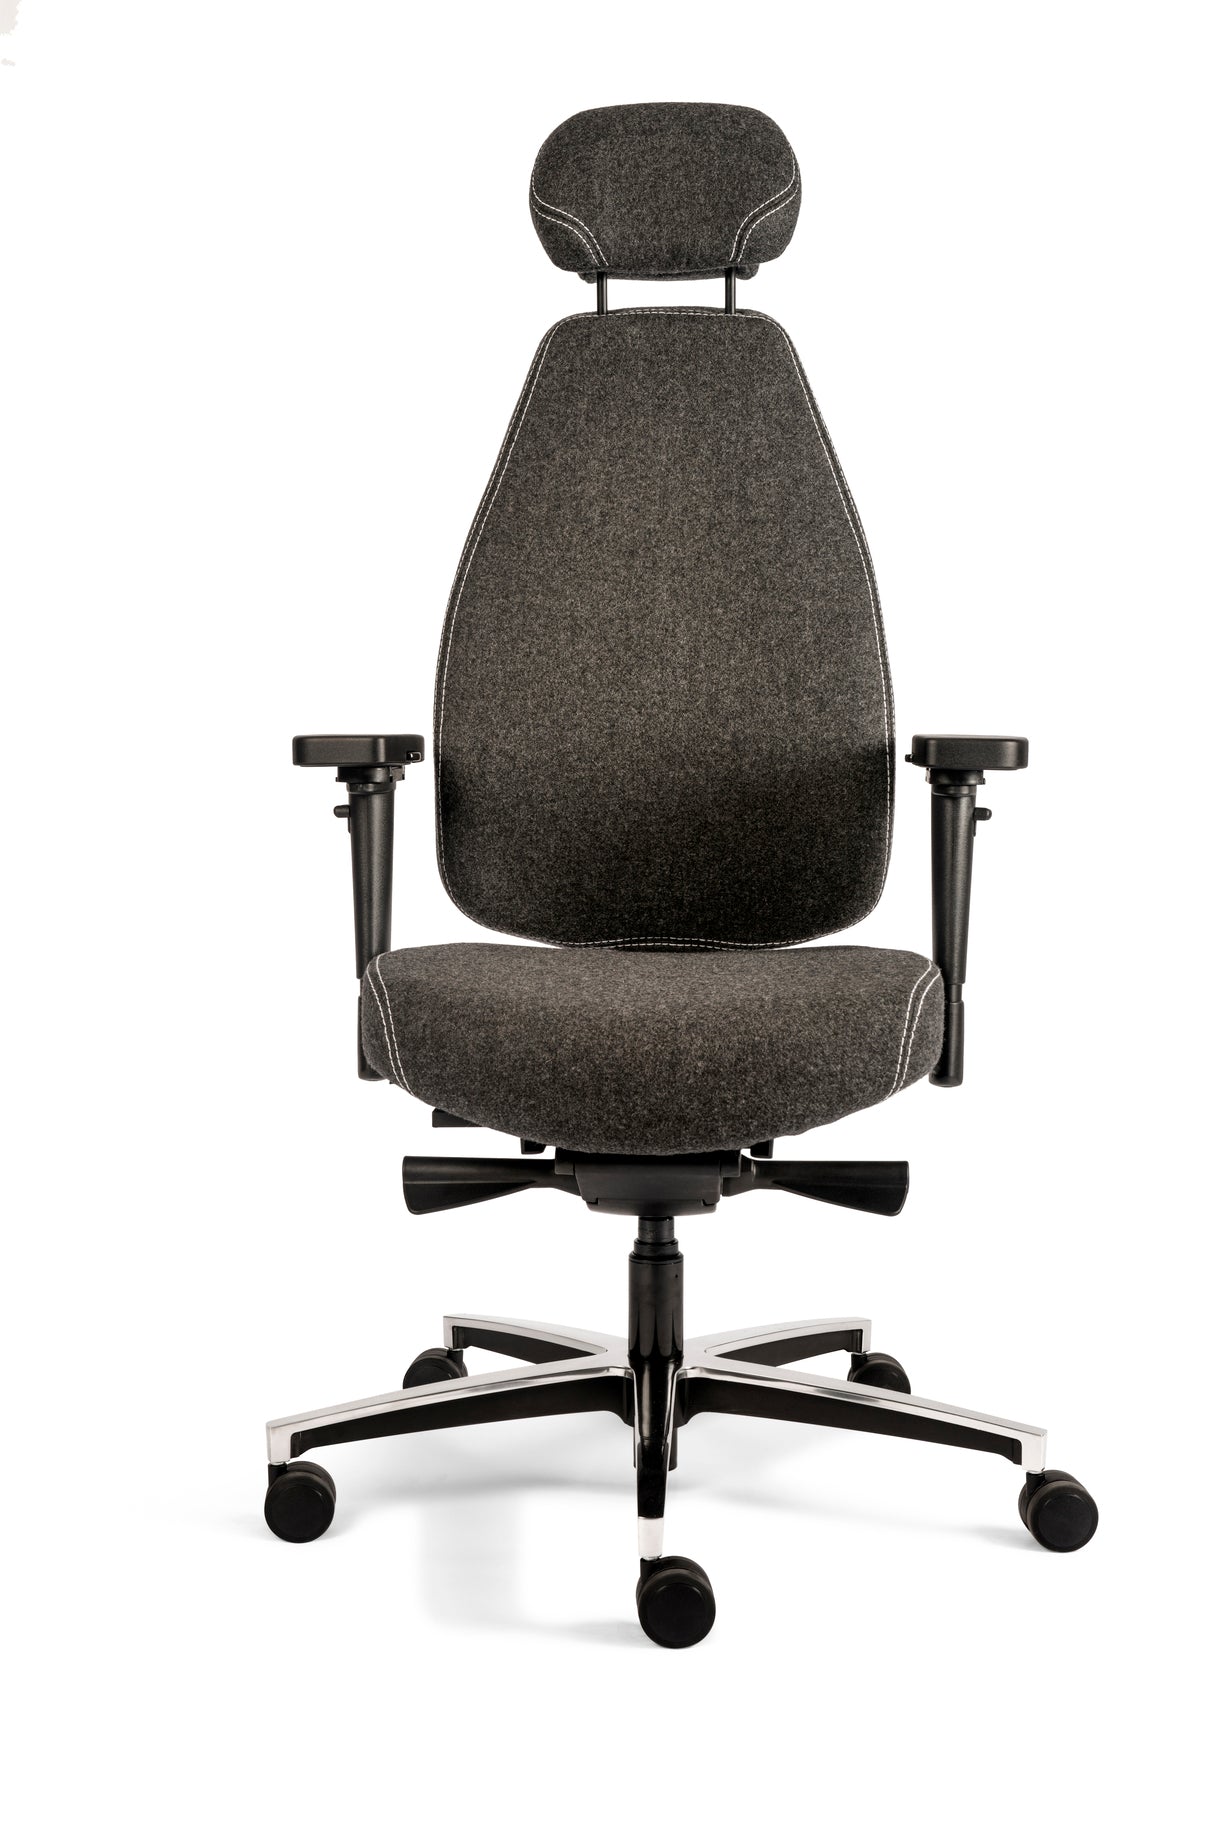 Chairlab Monaco comfort - High-end bureaustoel - Chairlab